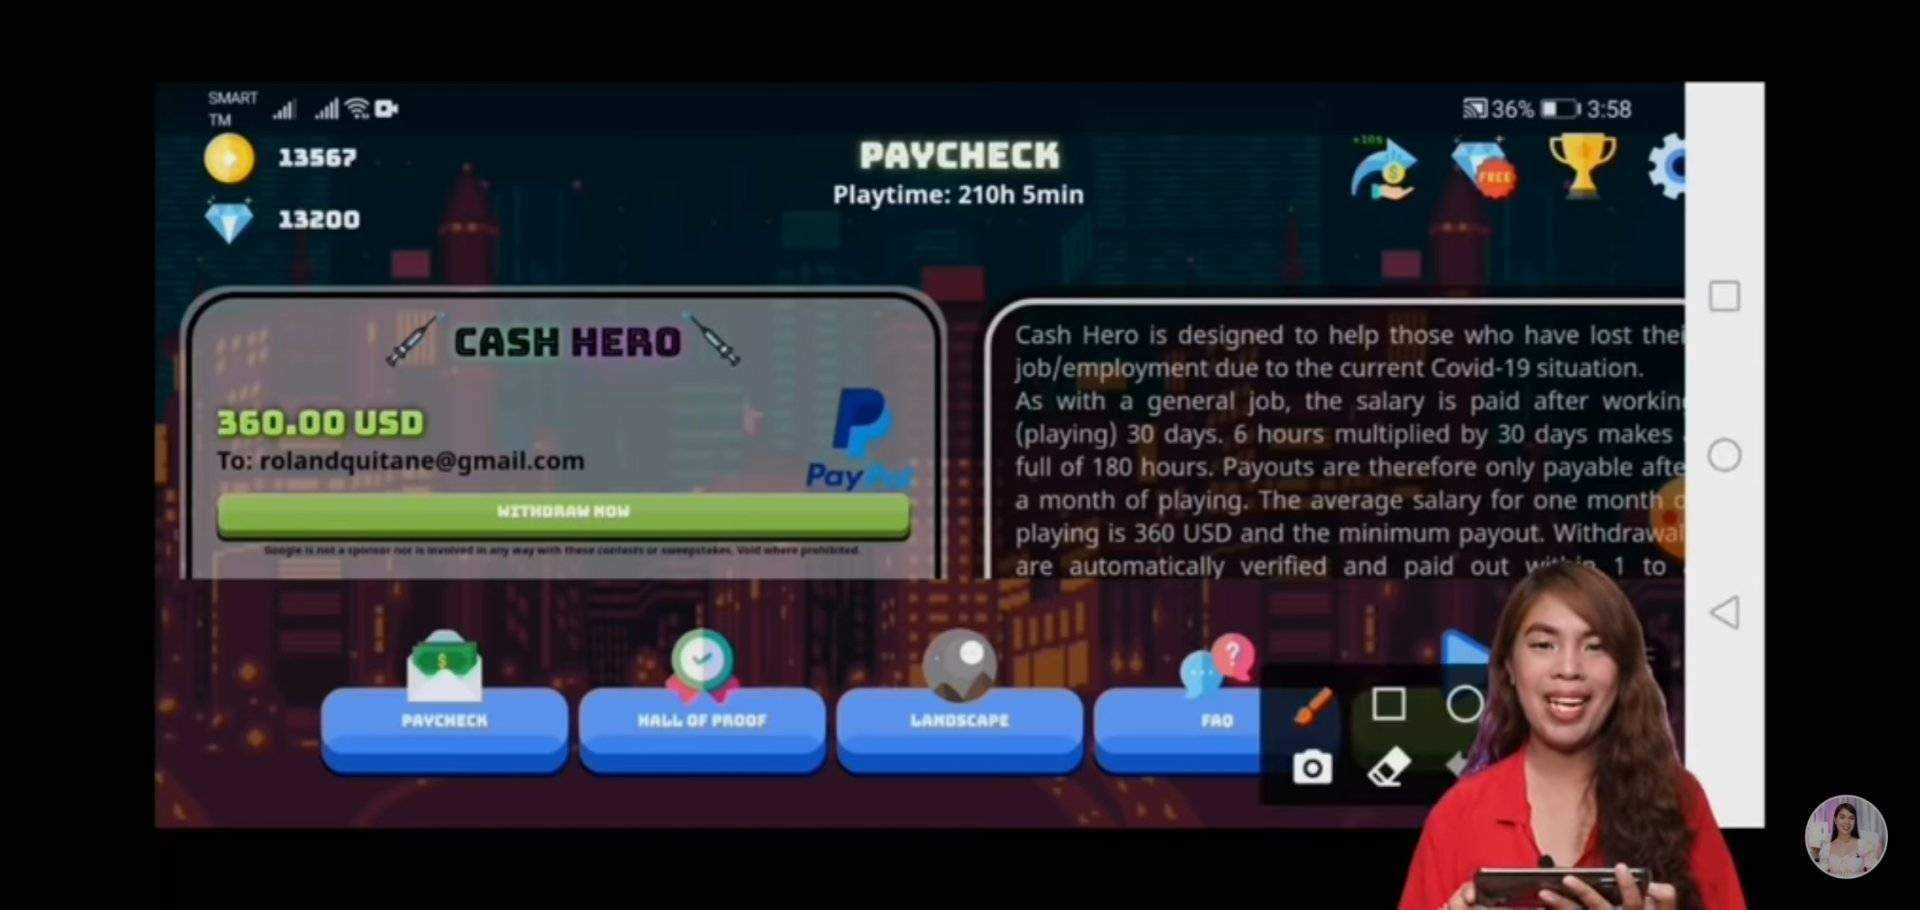 Free $360 Paypal Covid cash hero play to earn games, Proven by Positive chicka on YøùTùbé